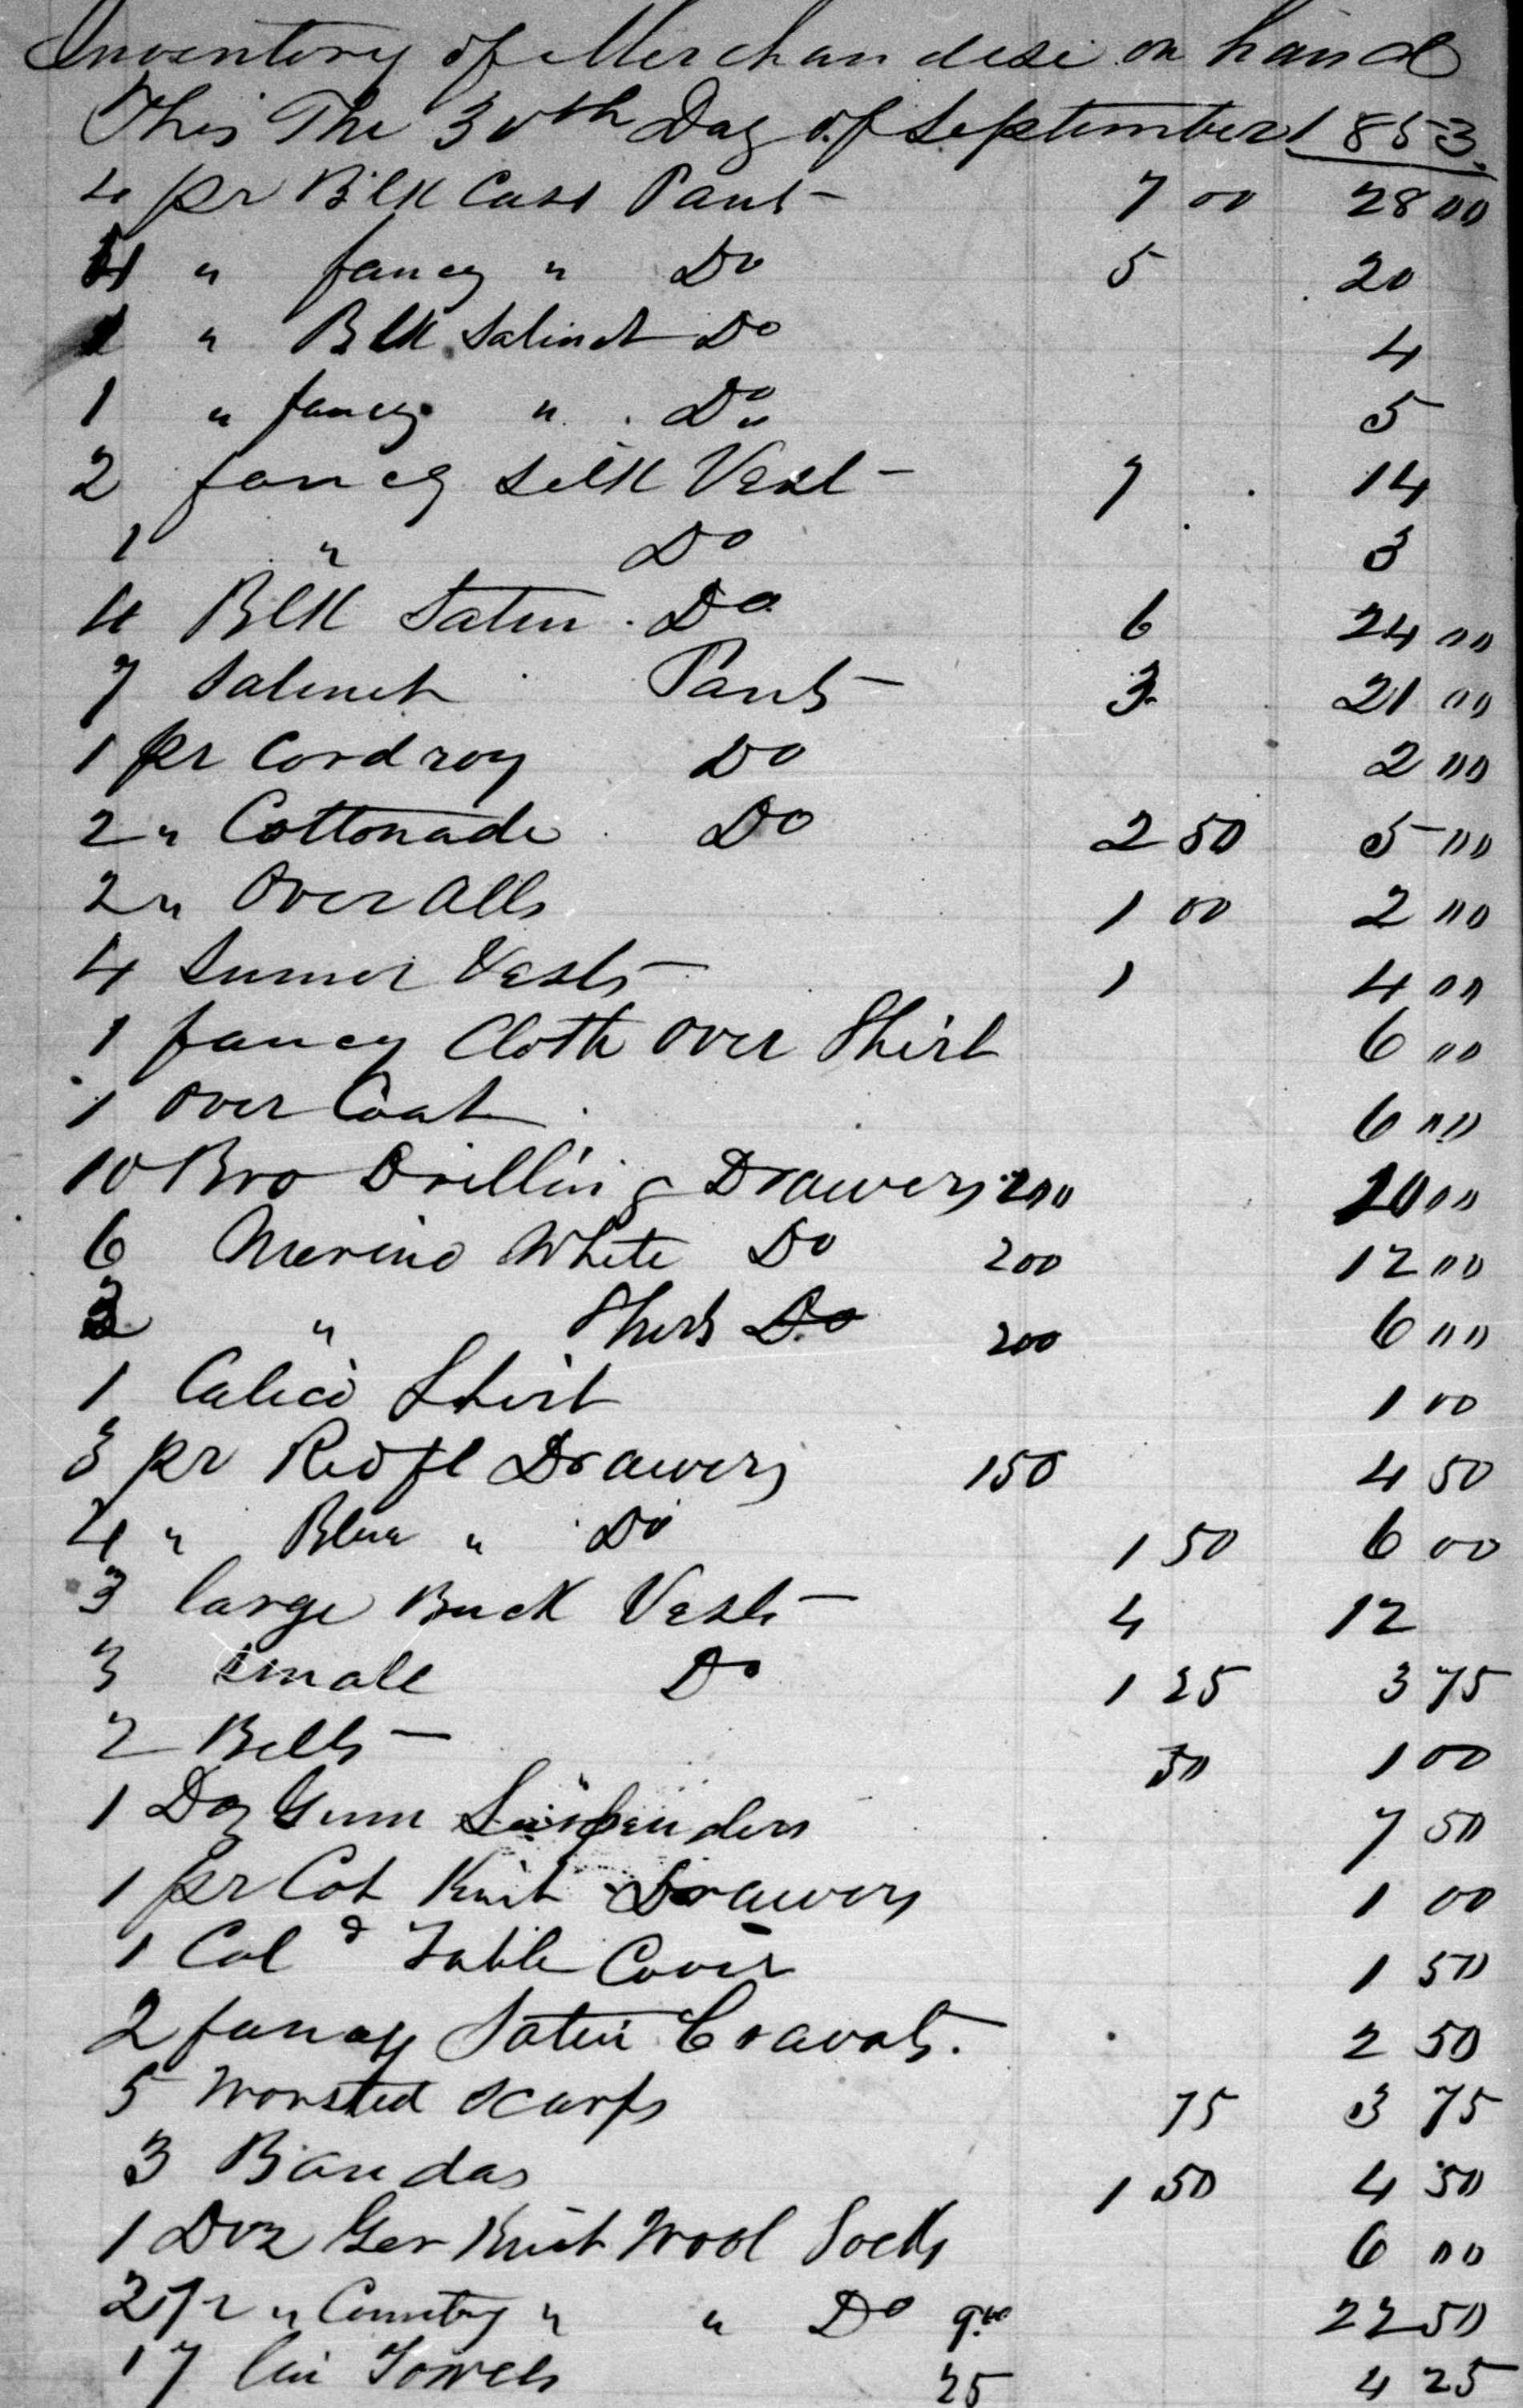 1853 Birdseye Store Inventory